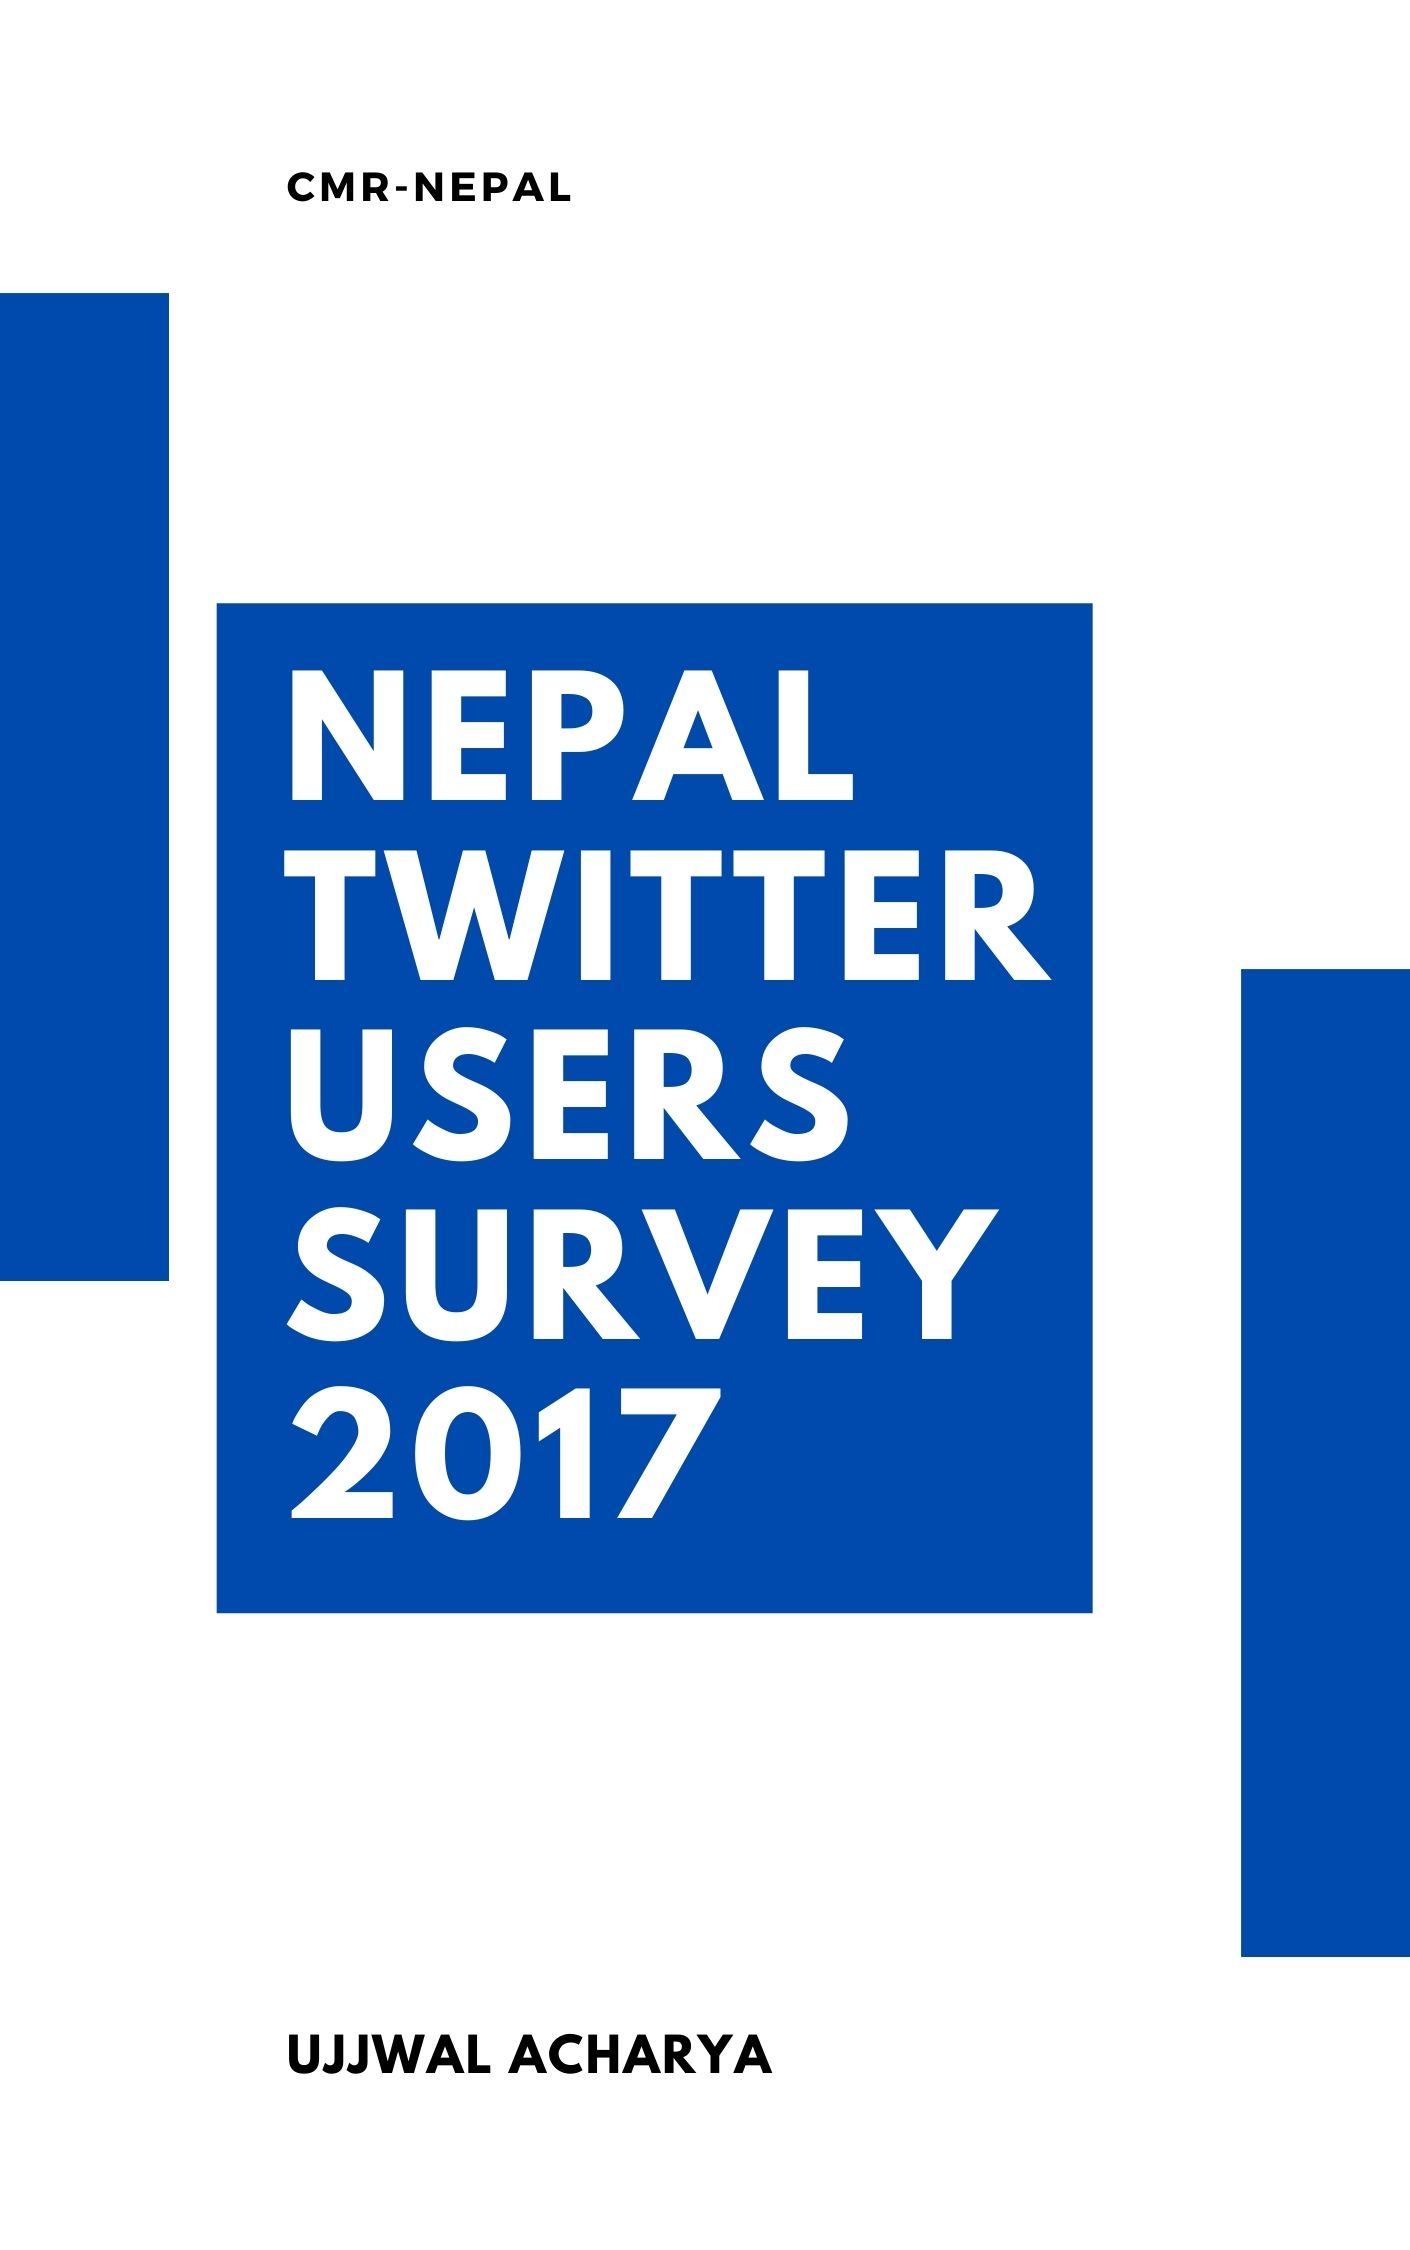 Nepal Twitter Users Survey 2017